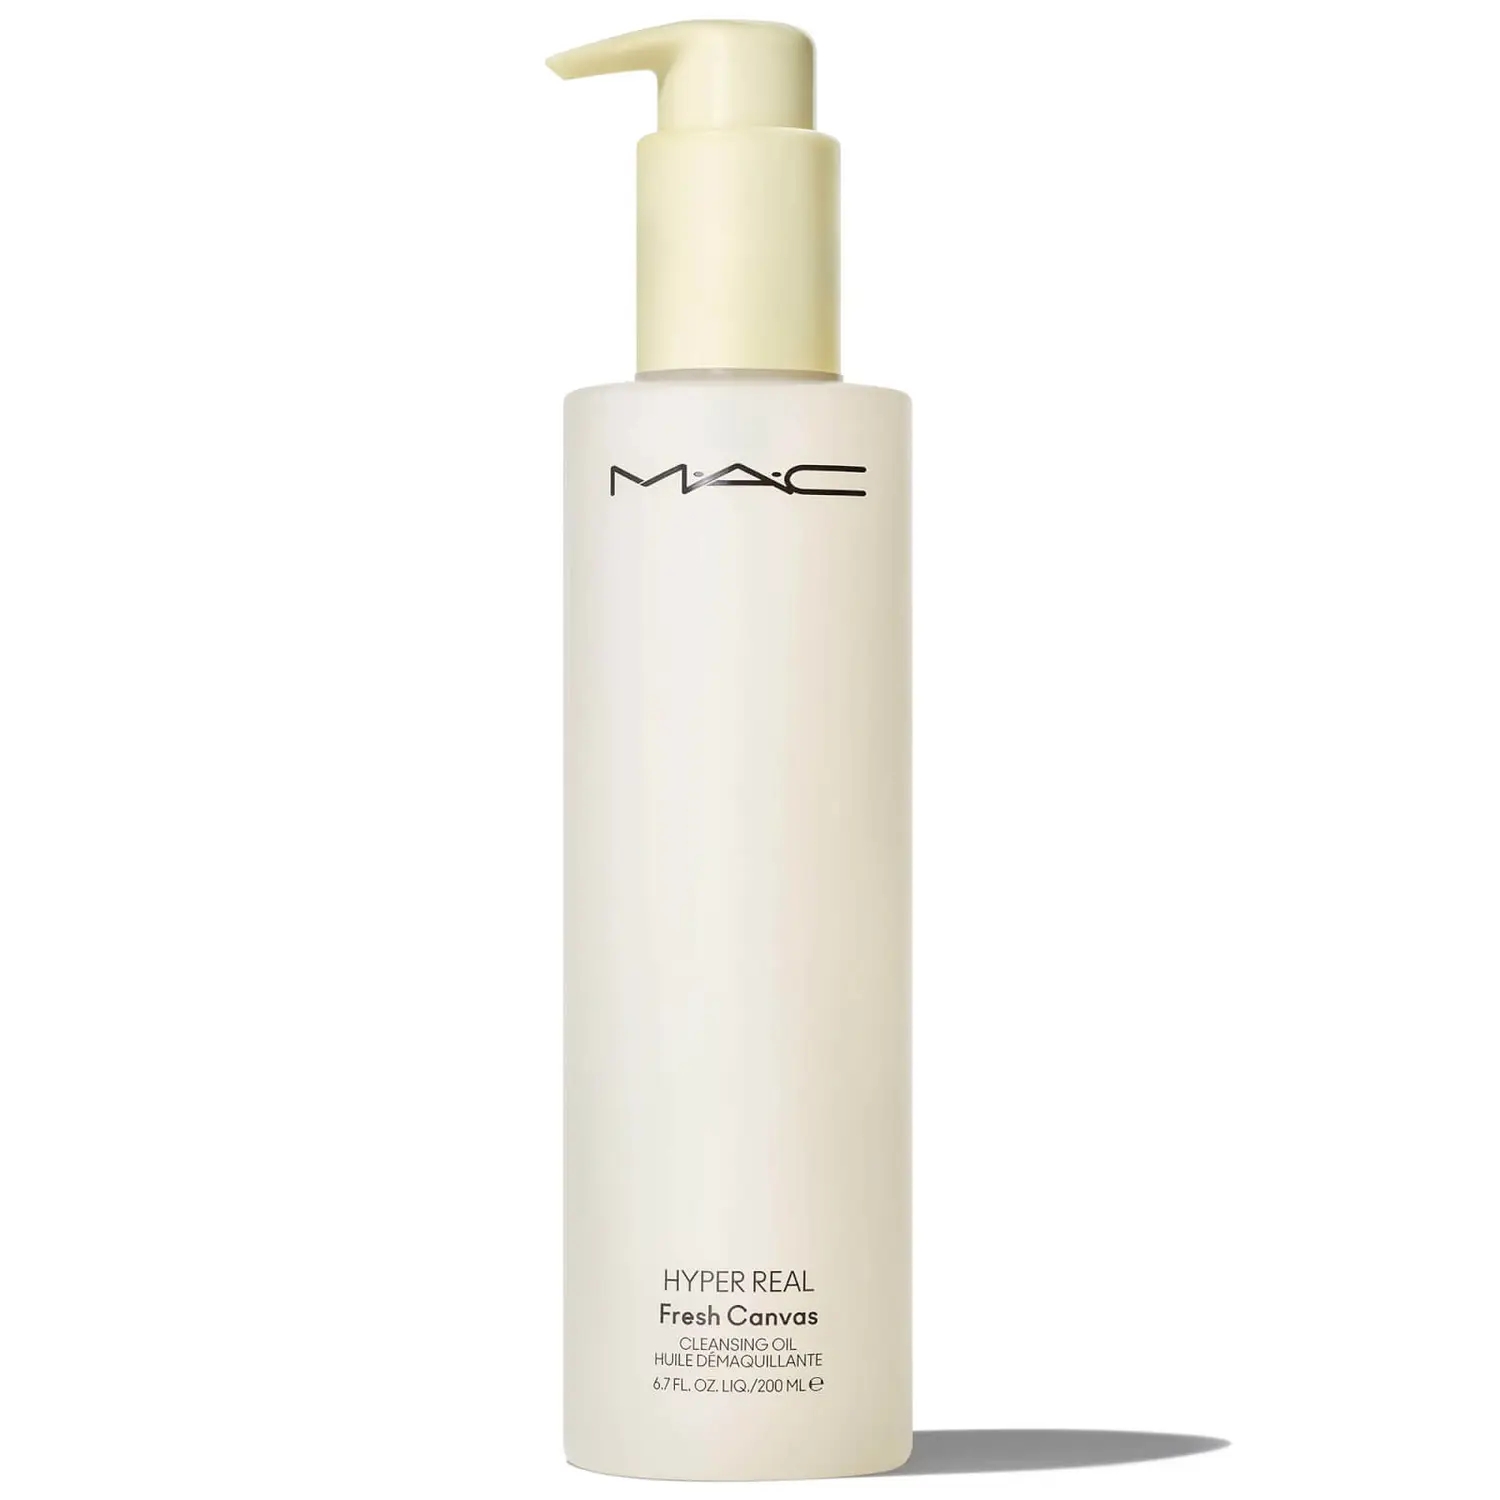 M.A.C | M.A.C Hyper Real Fresh Canvas Cleansing Oil (200ml)